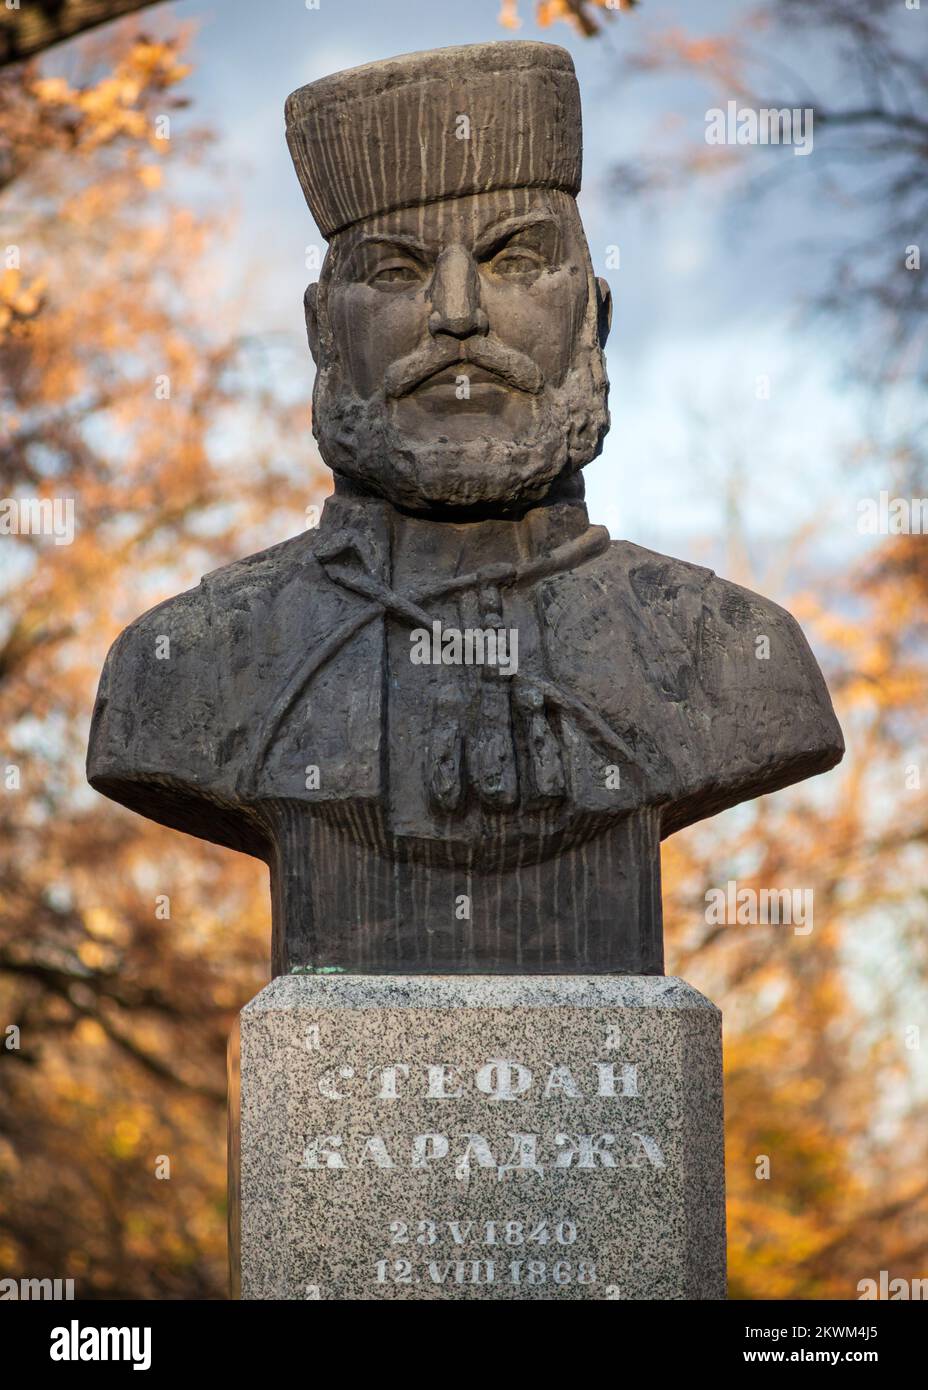 Bust of Stefan Karadzha as a prominent Bulgarian revolutionist and rebellion leader against the Ottoman Empire. Sofia, Bulgaria Stock Photo